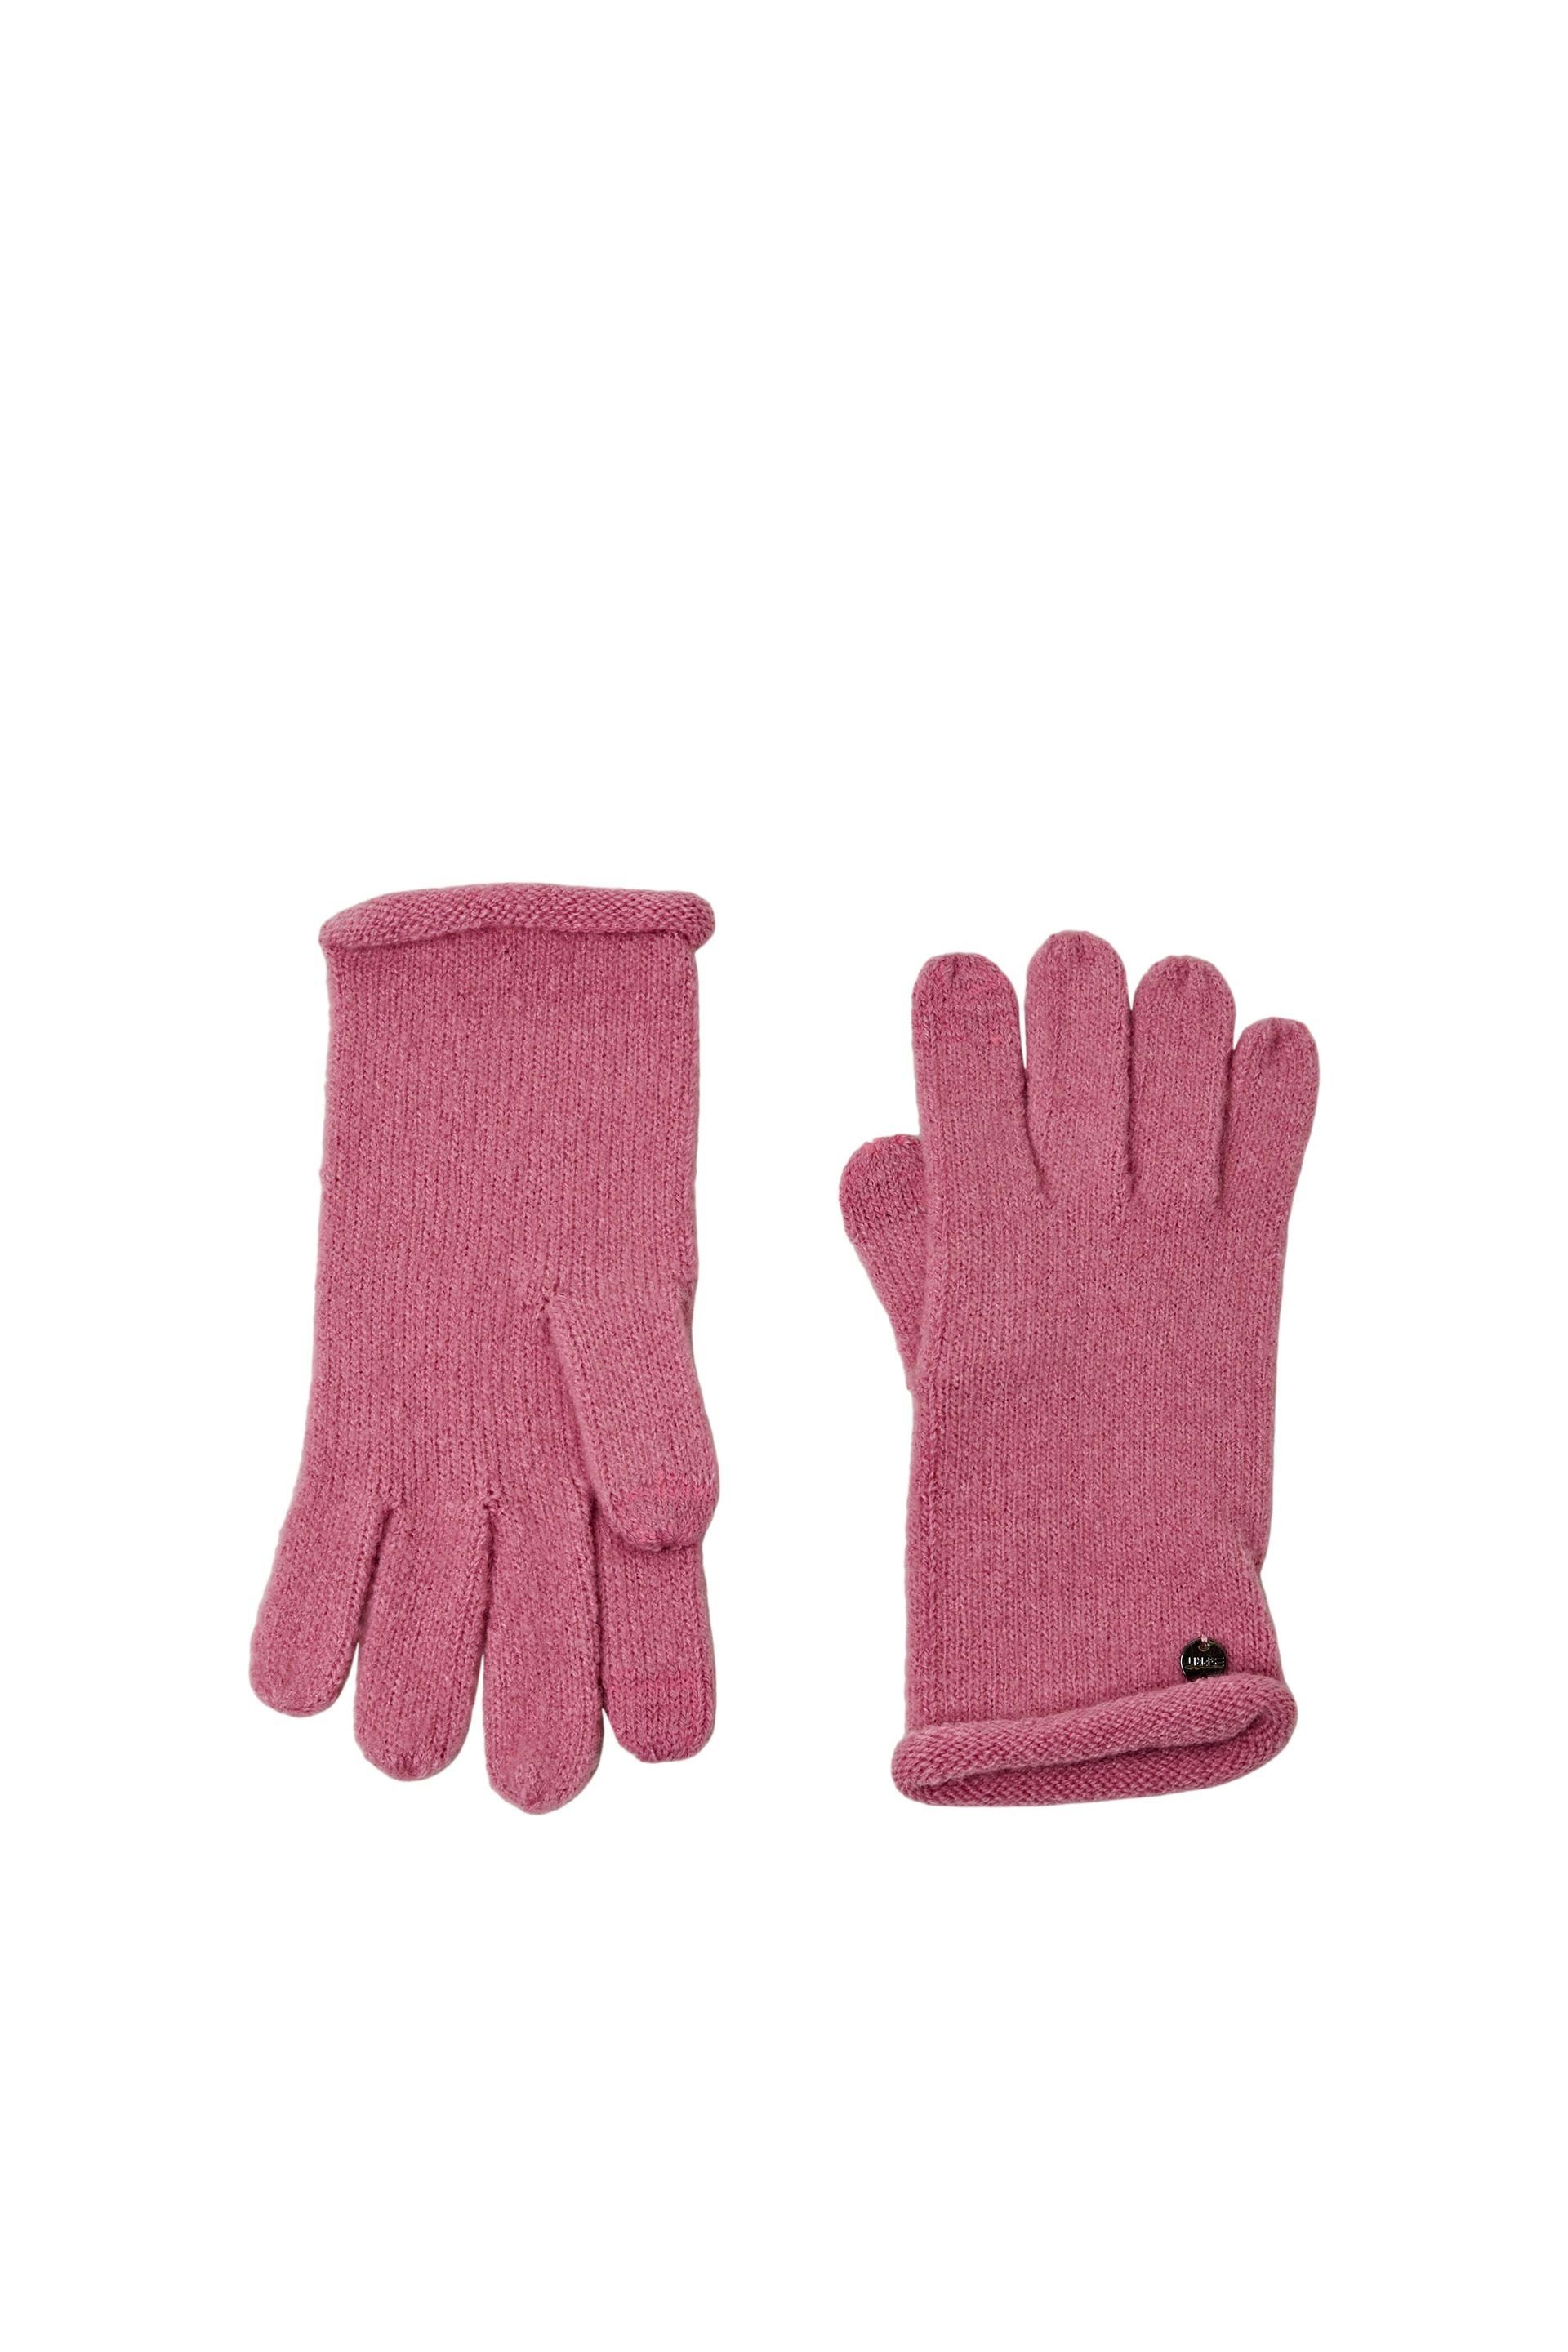 Esprit Strickhandschuhe pink